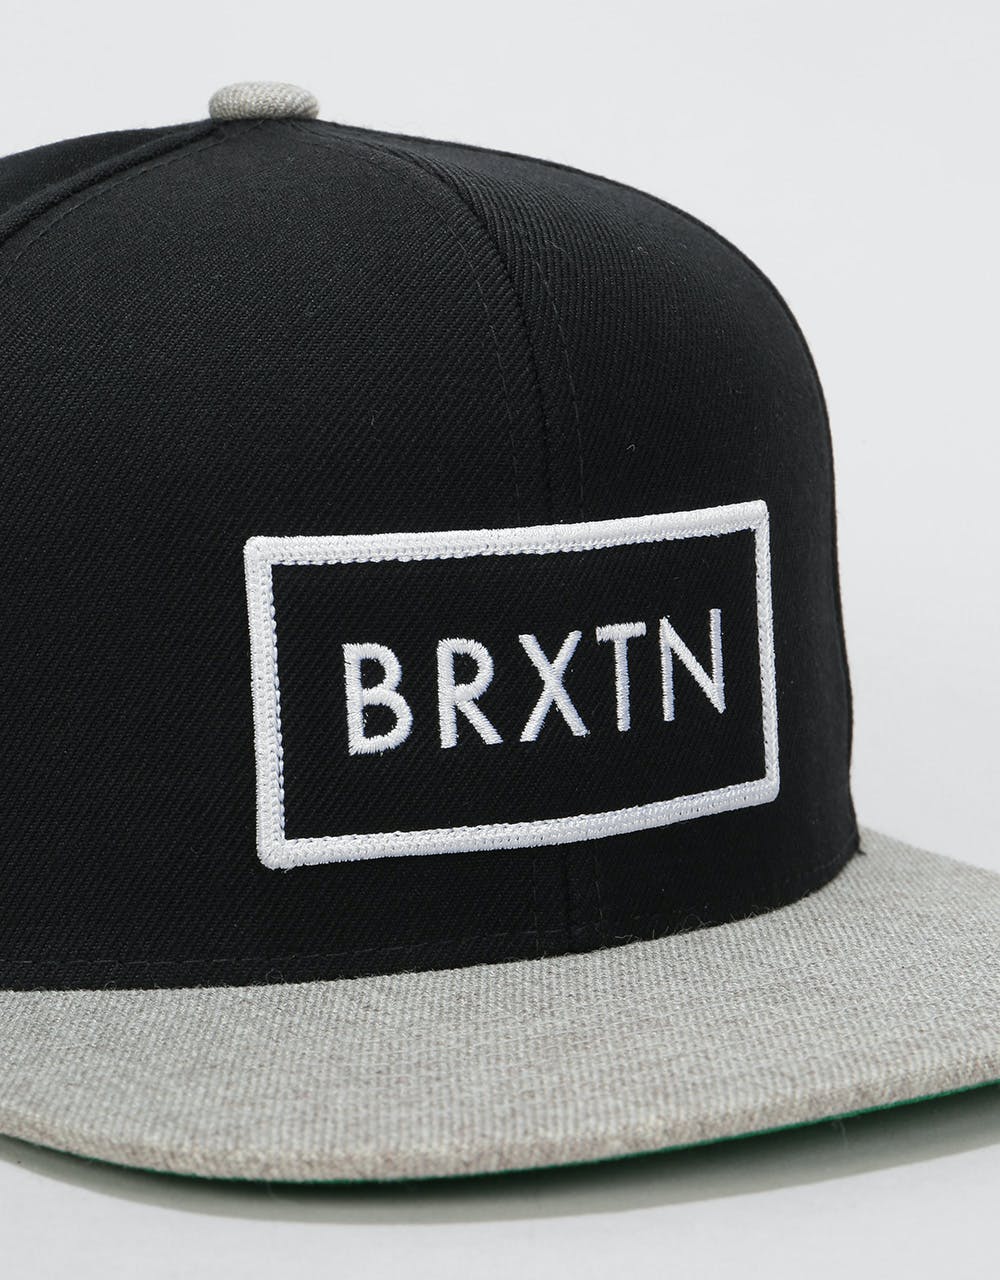 Brixton Rift Snapback Cap - Black/Light Heather Grey